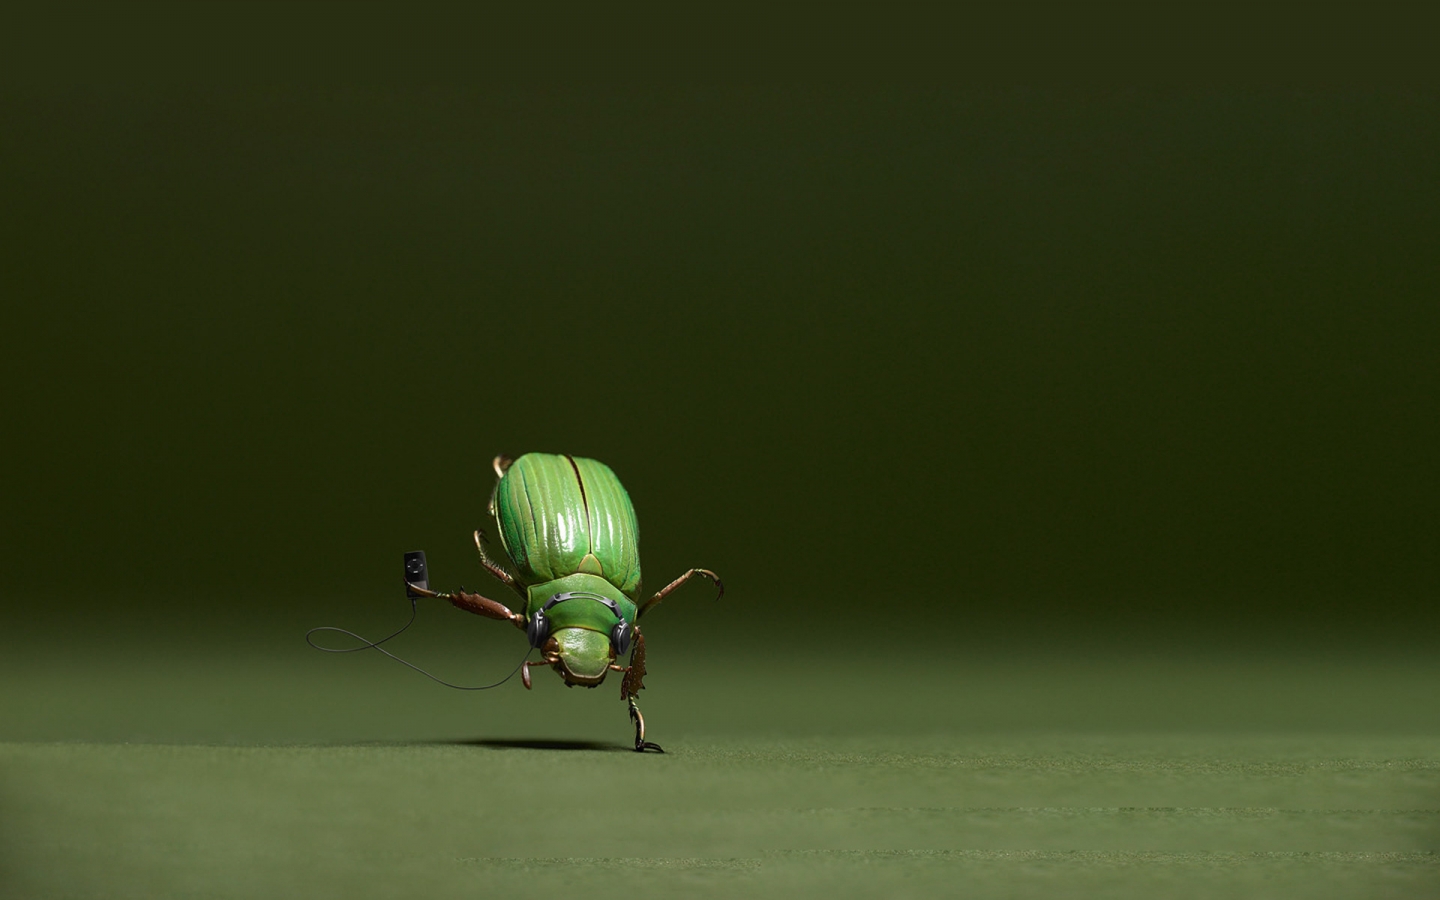 Dancing Bug for 1440 x 900 widescreen resolution